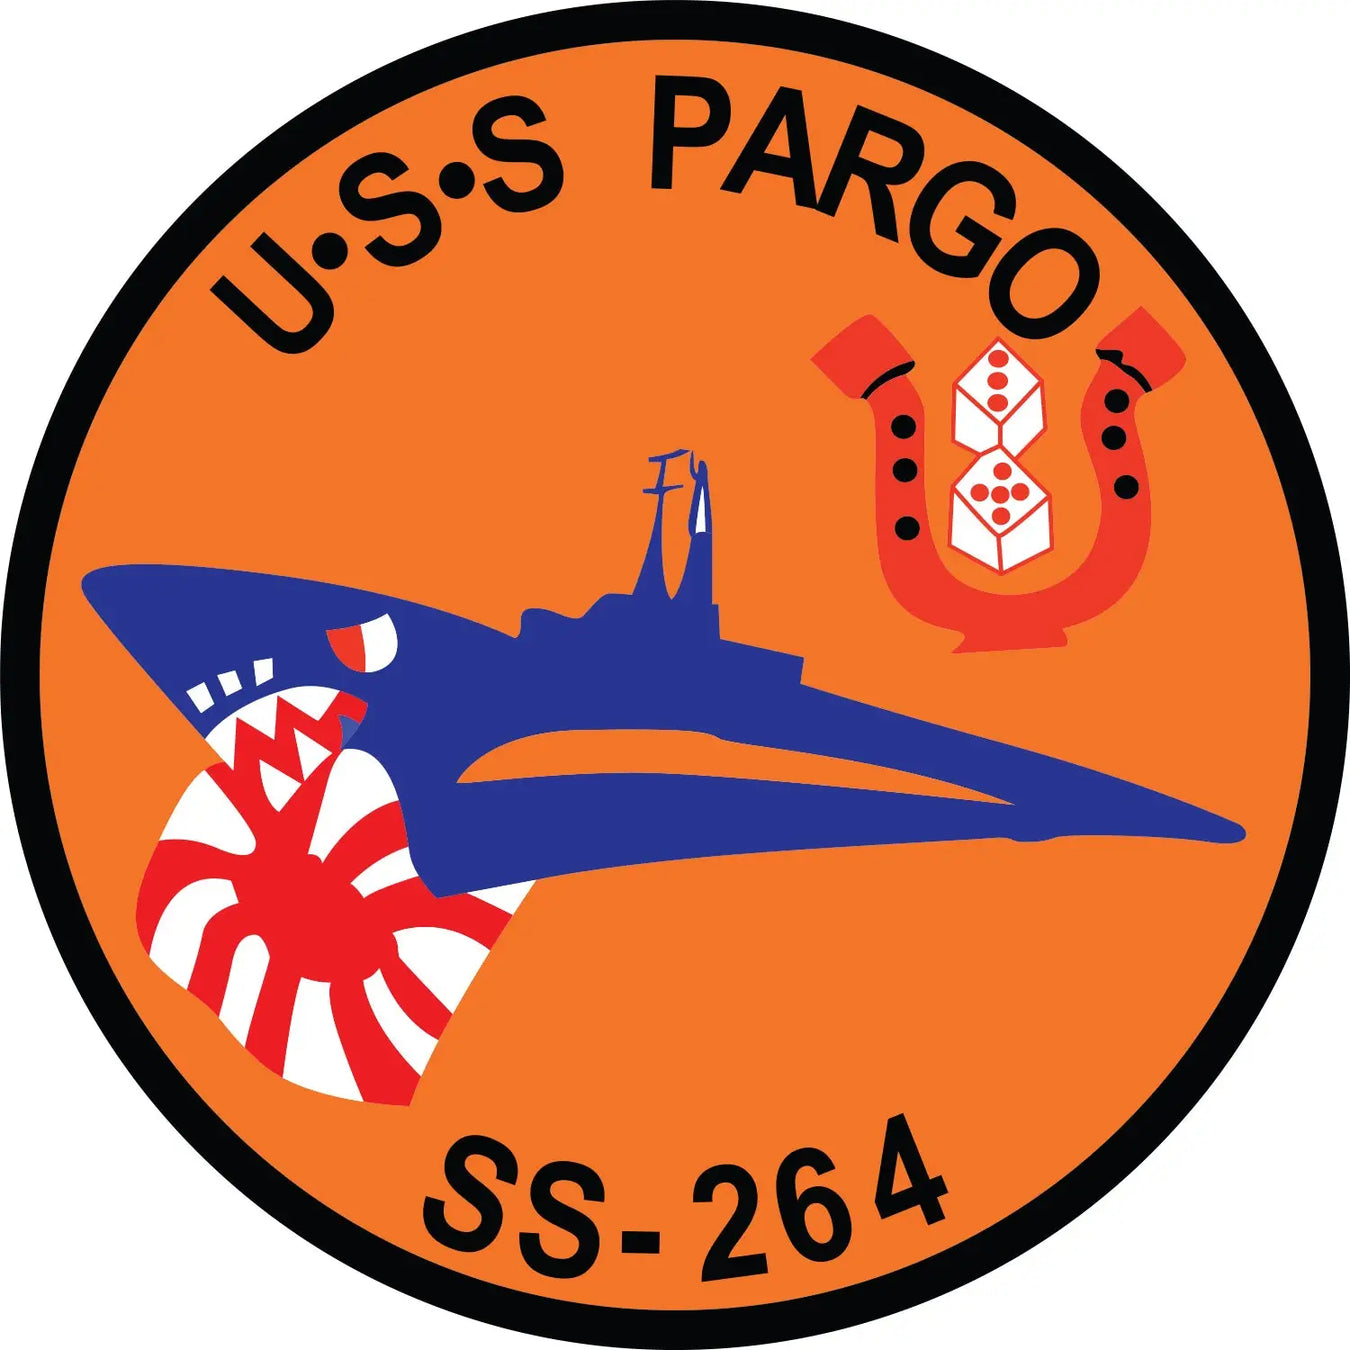 USS Pargo (SS-264)